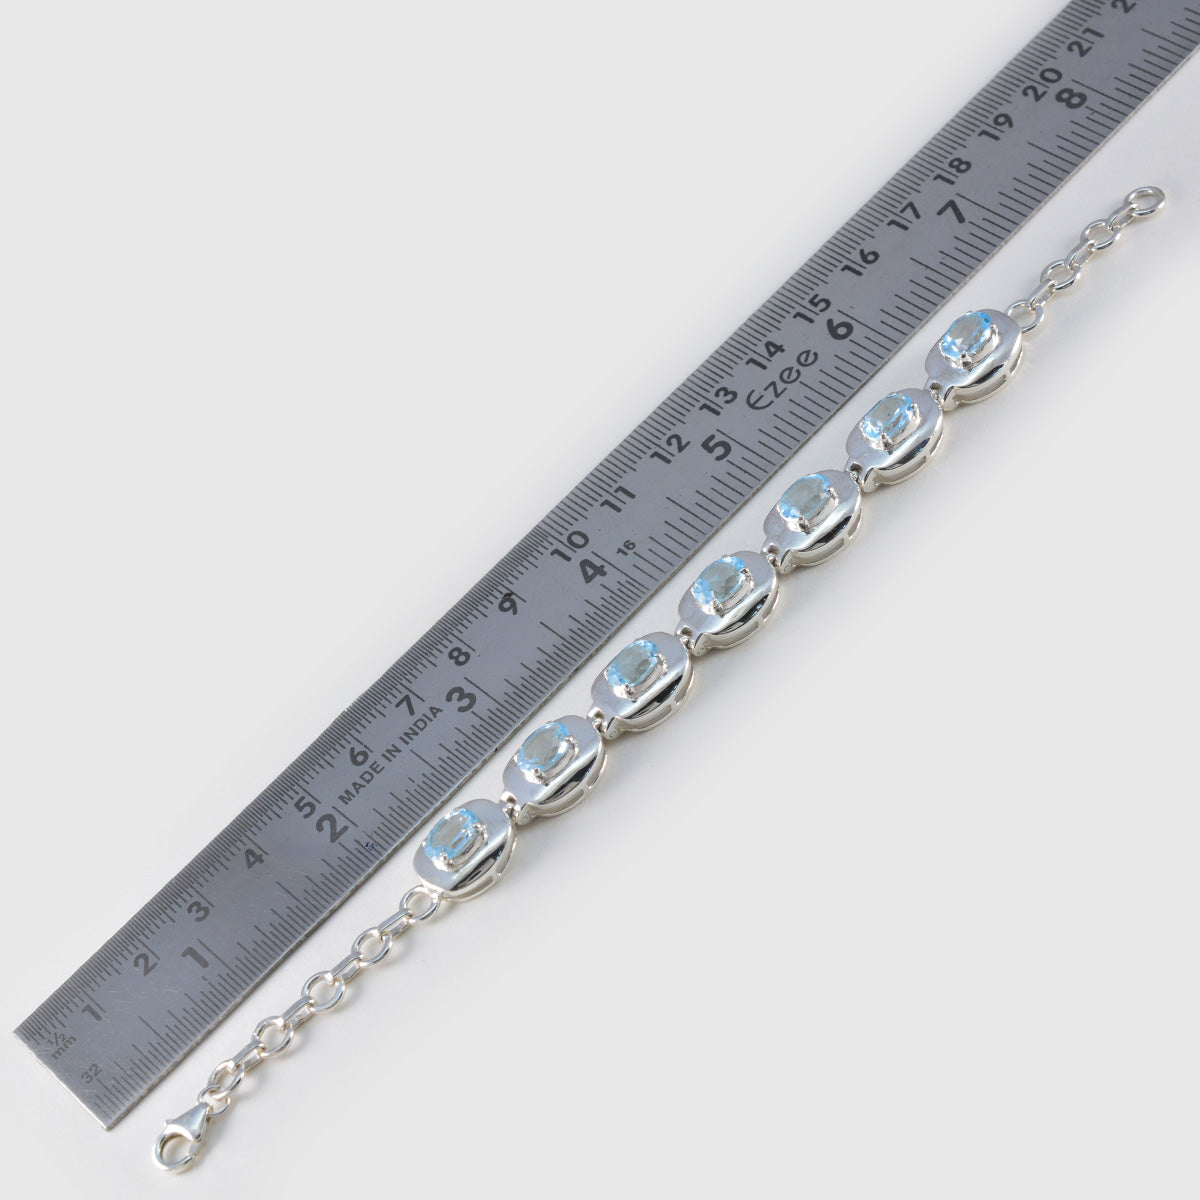 Riyo levert 925 sterling zilveren armband voor dames blauwe topaas armband Prong setting armband met vishaak schakelarmband L maat 6-8,5 inch.